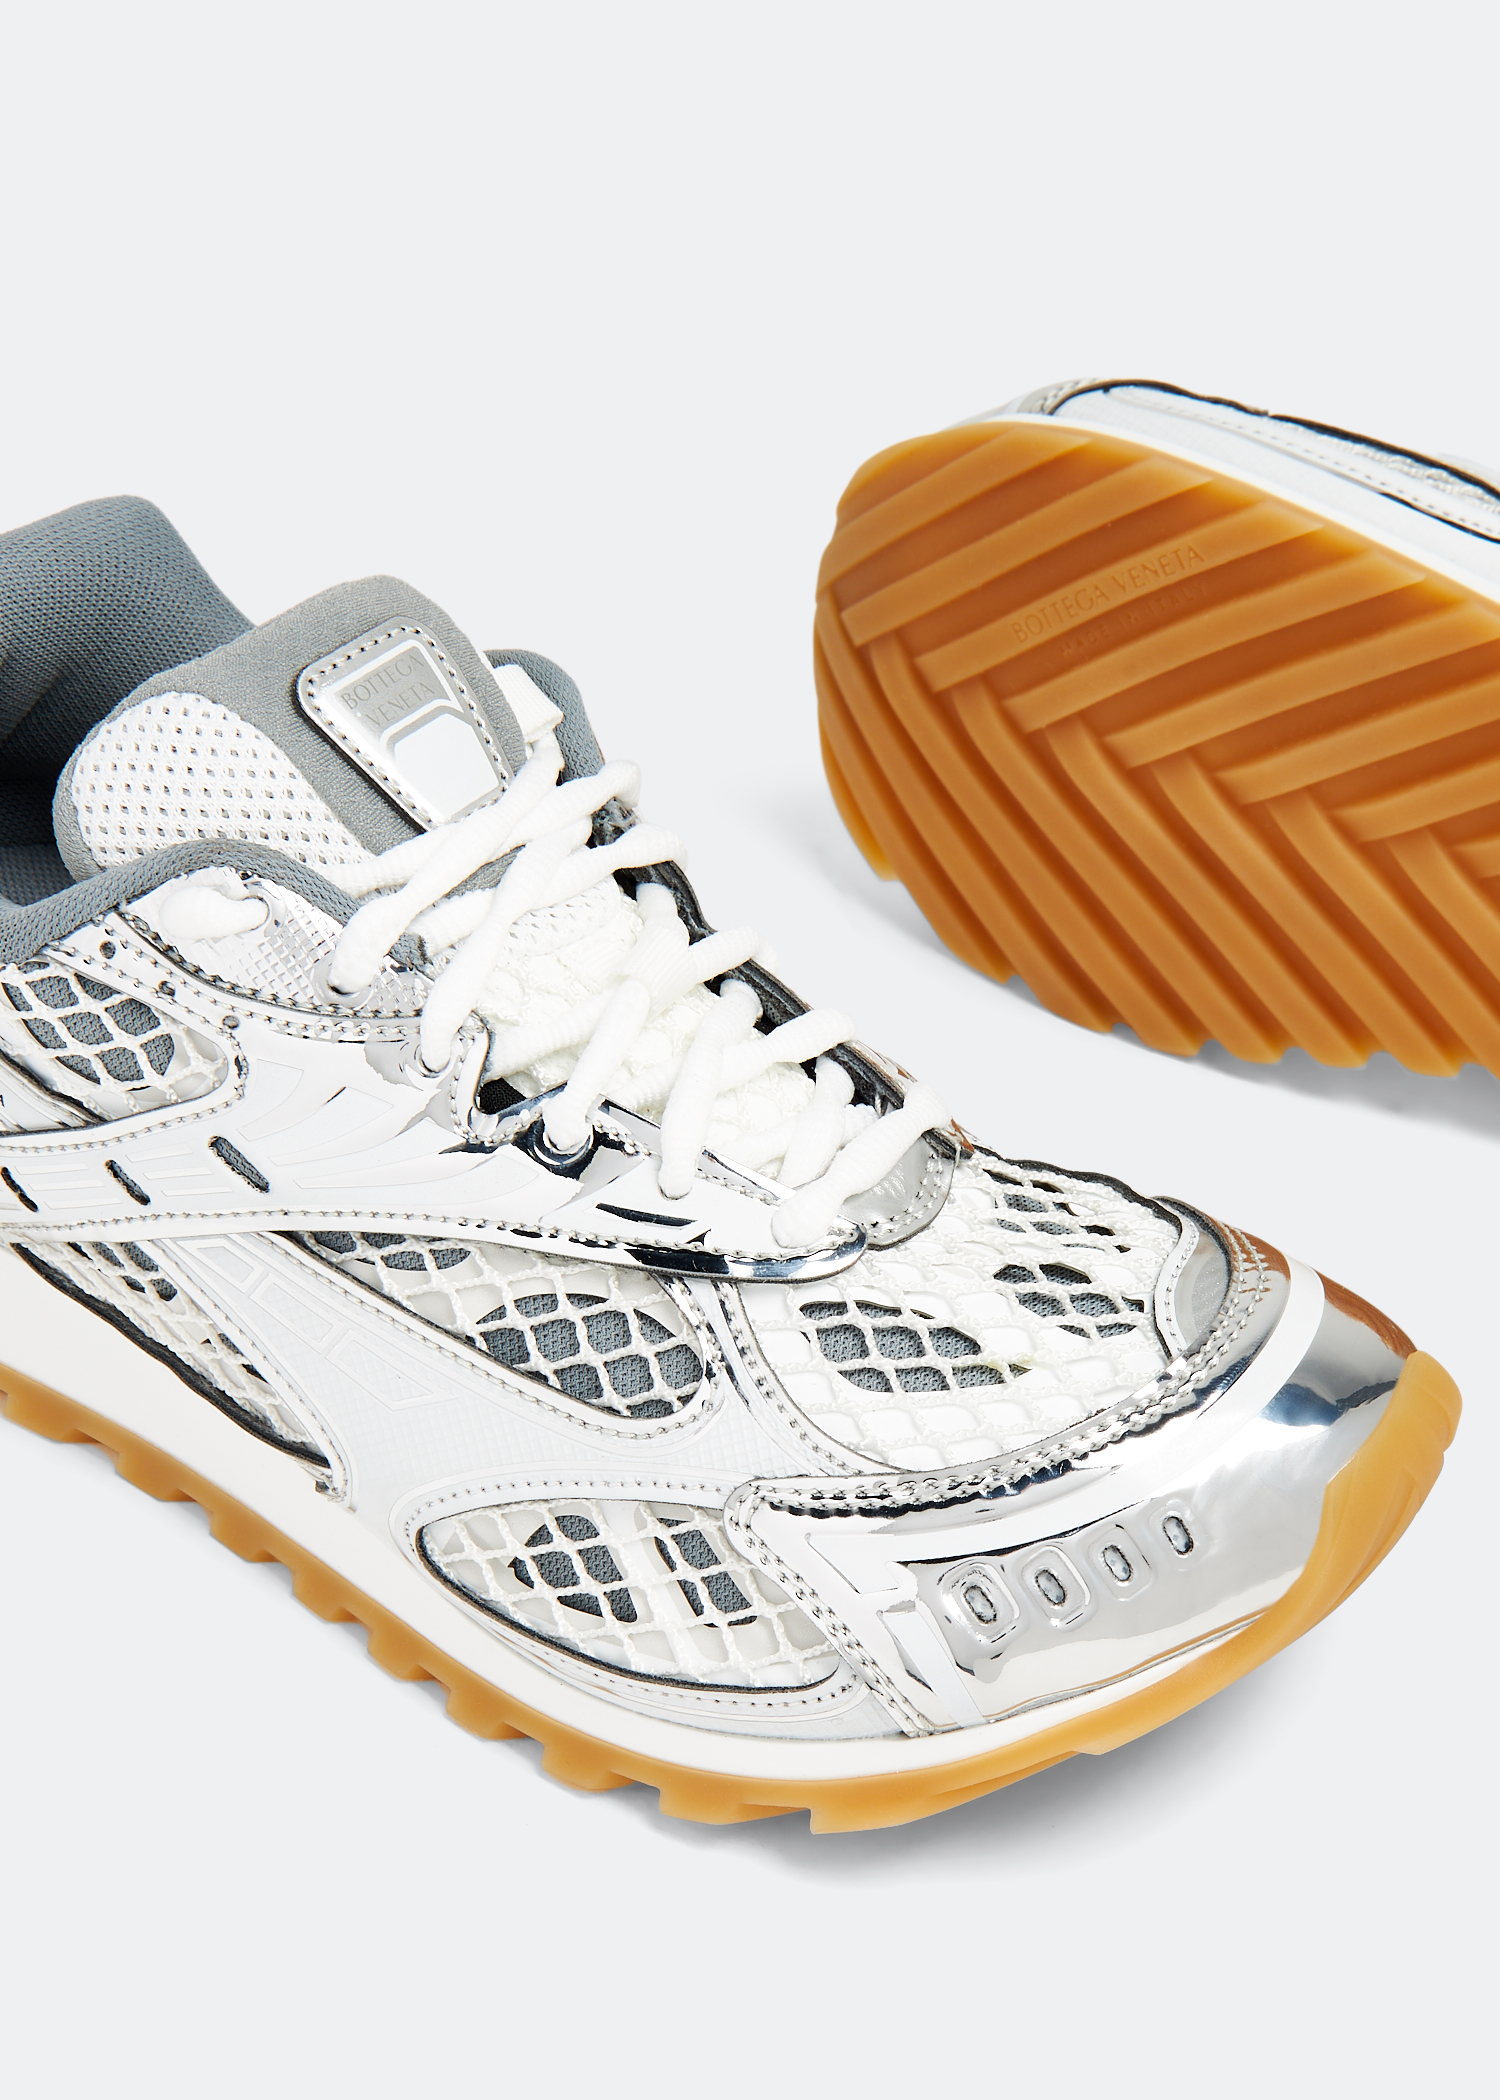 Bottega Veneta® Women's Orbit Sneaker in Silver / White / Optic